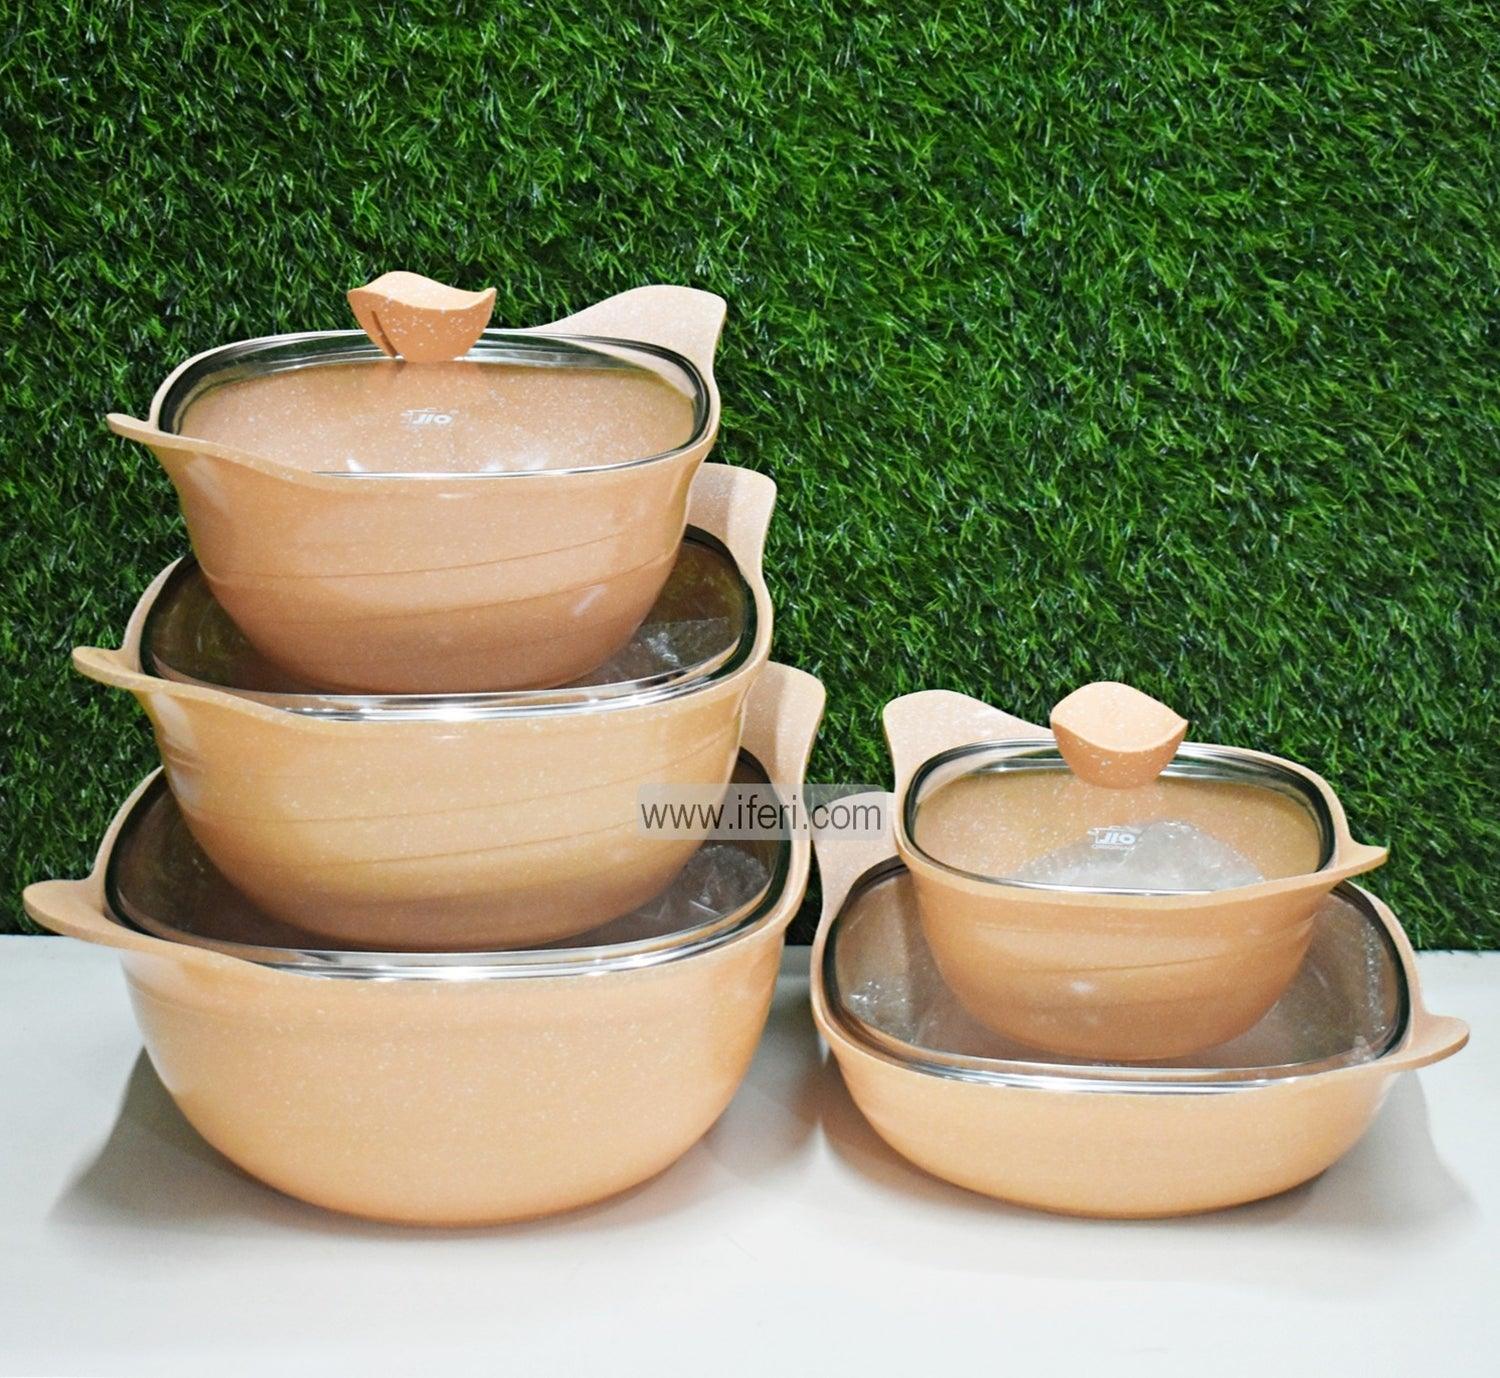 5 Pcs JIO Non Stick Granite Coated Cookware Set with Lid RH0677 Price in Bangladesh - iferi.com